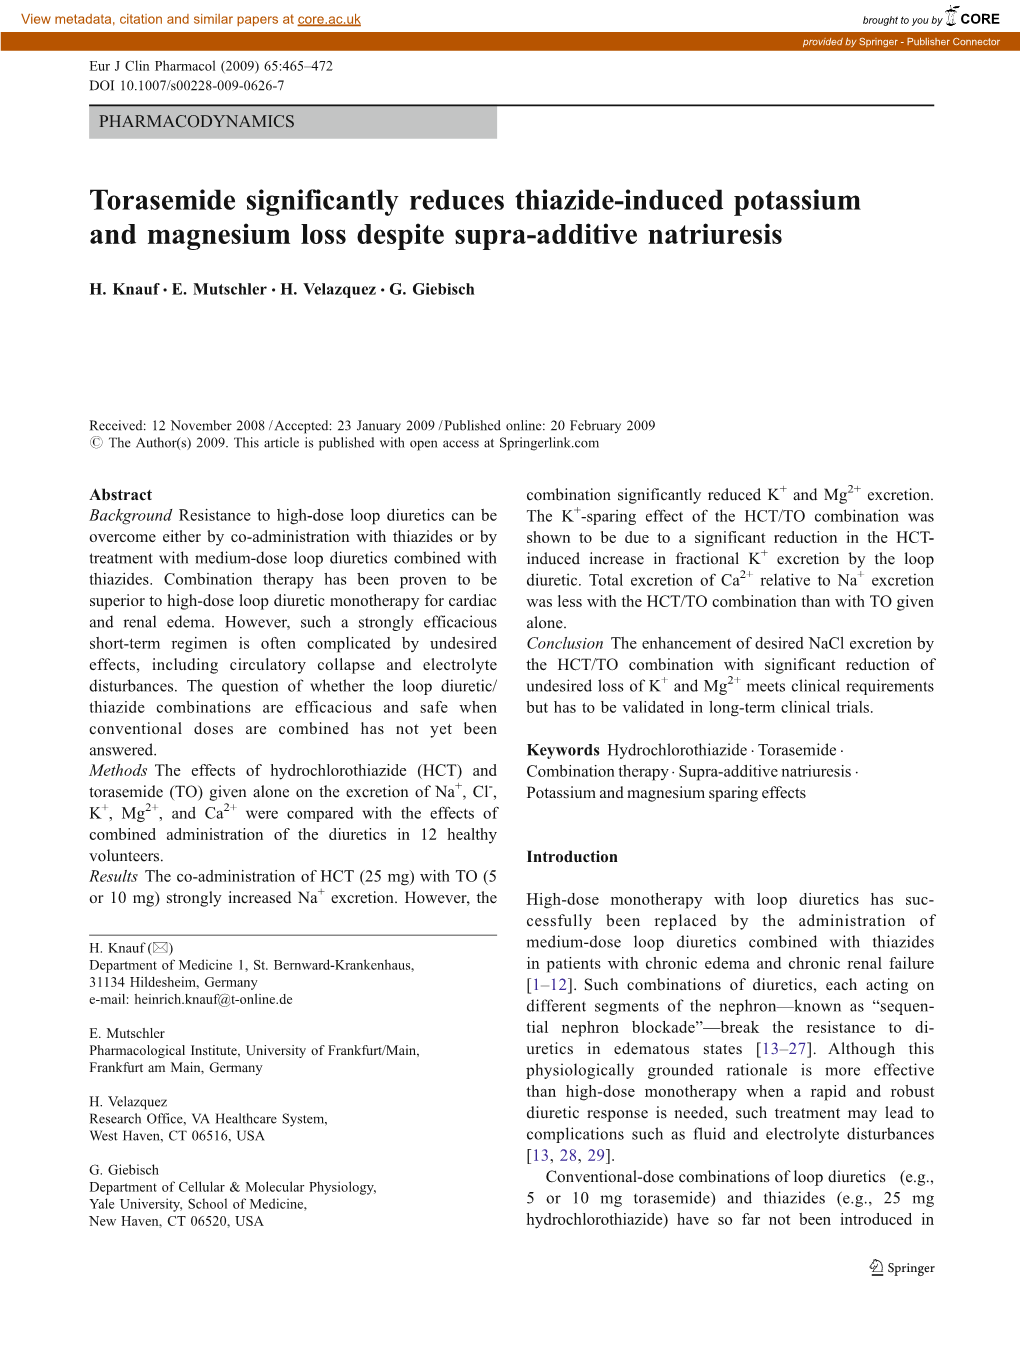 Torasemide Significantly Reduces Thiazide-Induced Potassium and Magnesium Loss Despite Supra-Additive Natriuresis